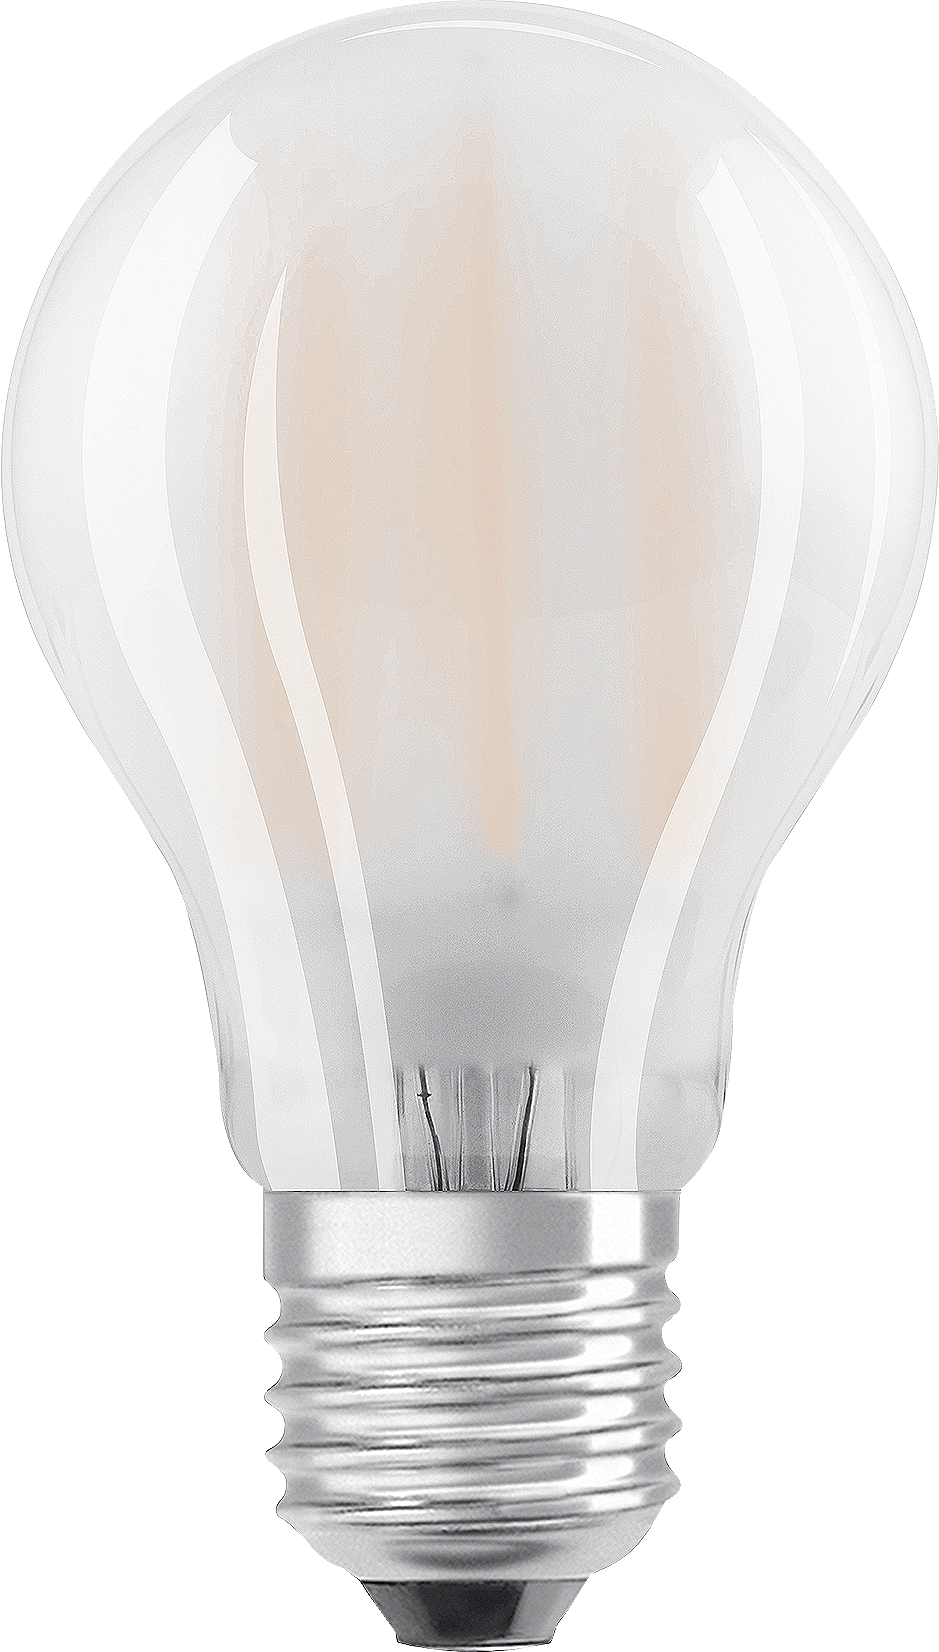 OSRAM LED-Lampe Retrofit Star Classic A E27, 7.5W, 1055lm, warmweiss - Lampen, Leuchten